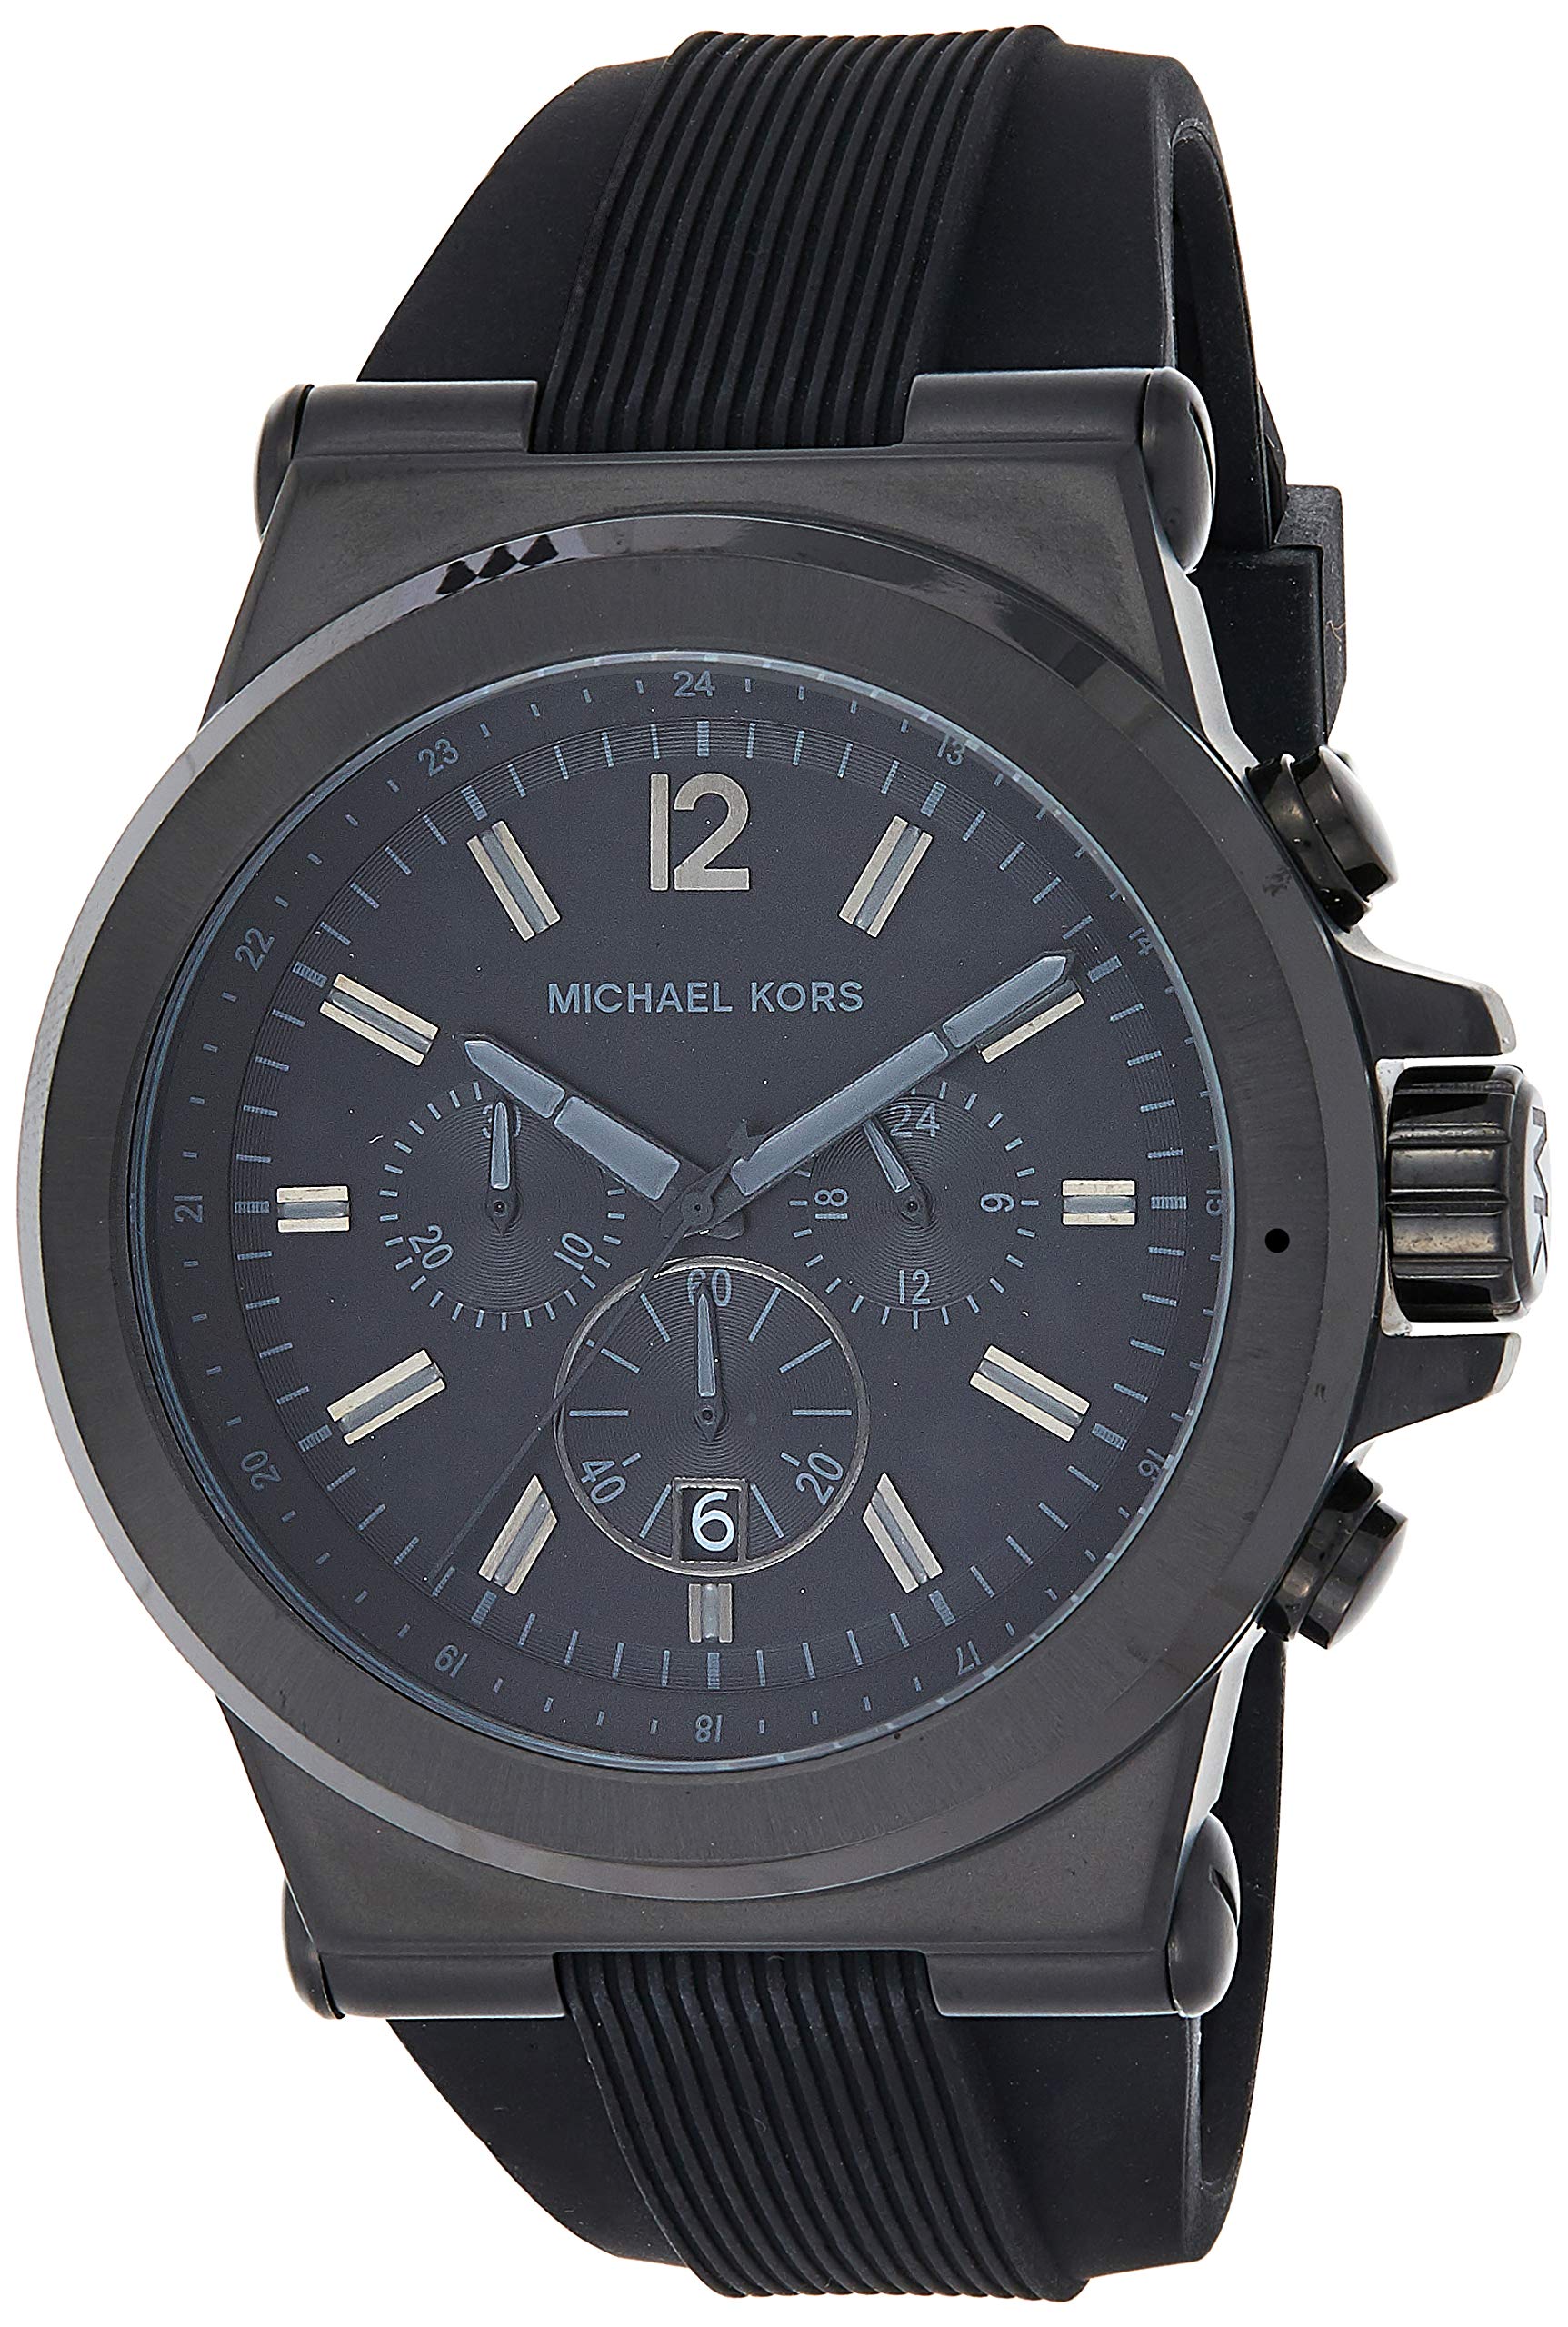 Mua Michael Kors Men's Dylan Black Watch MK8152 trên Amazon Mỹ chính hãng  2023 | Fado